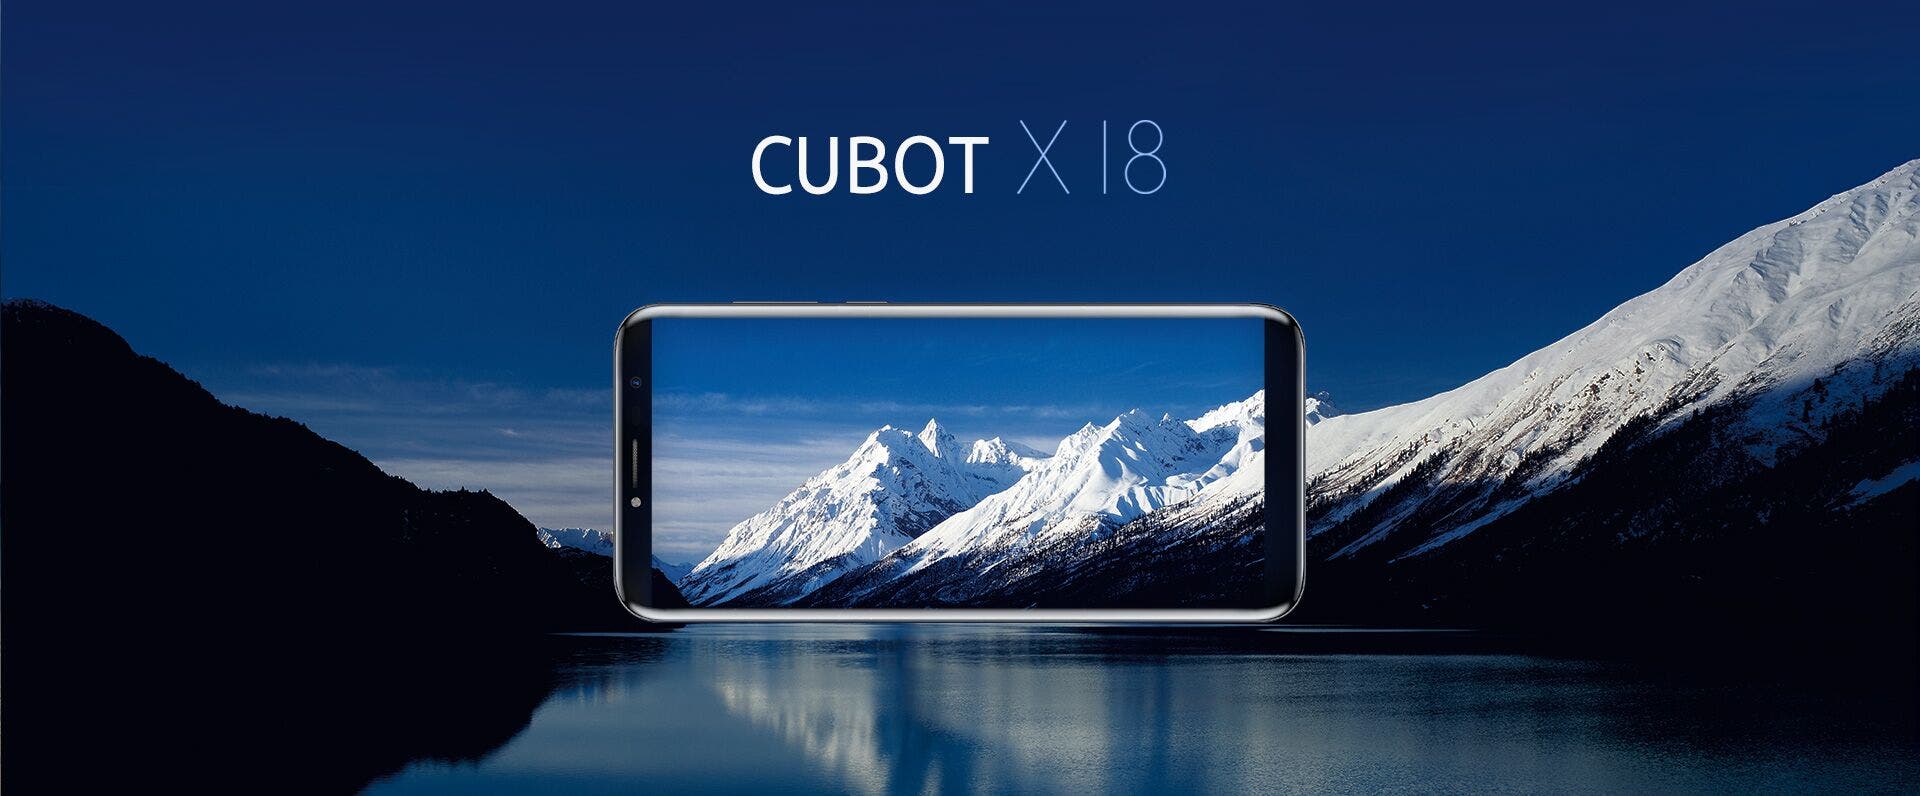 Cubot X18